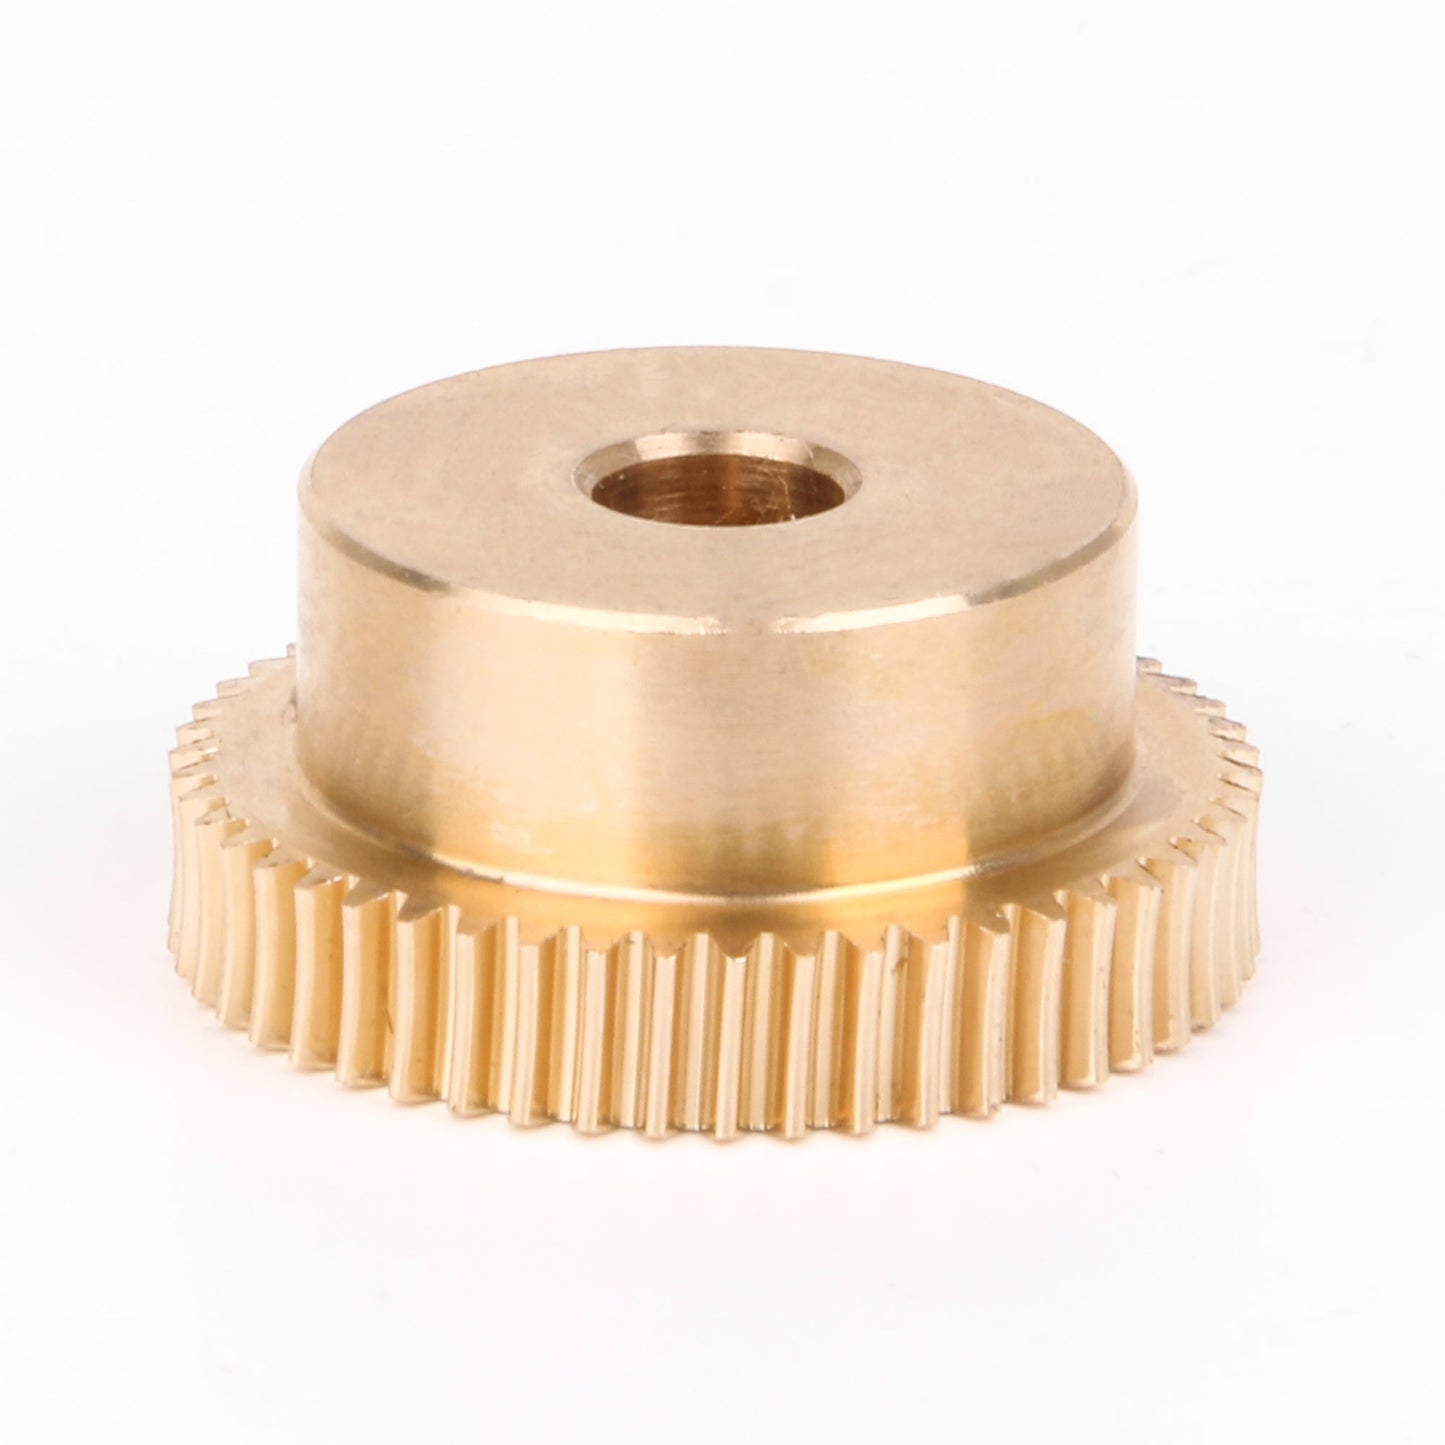 BQLZR 50T 0.5Modulus Brass Gear Wheel 6mm Hole Dia Shaft Kit w/ Screw for Industry